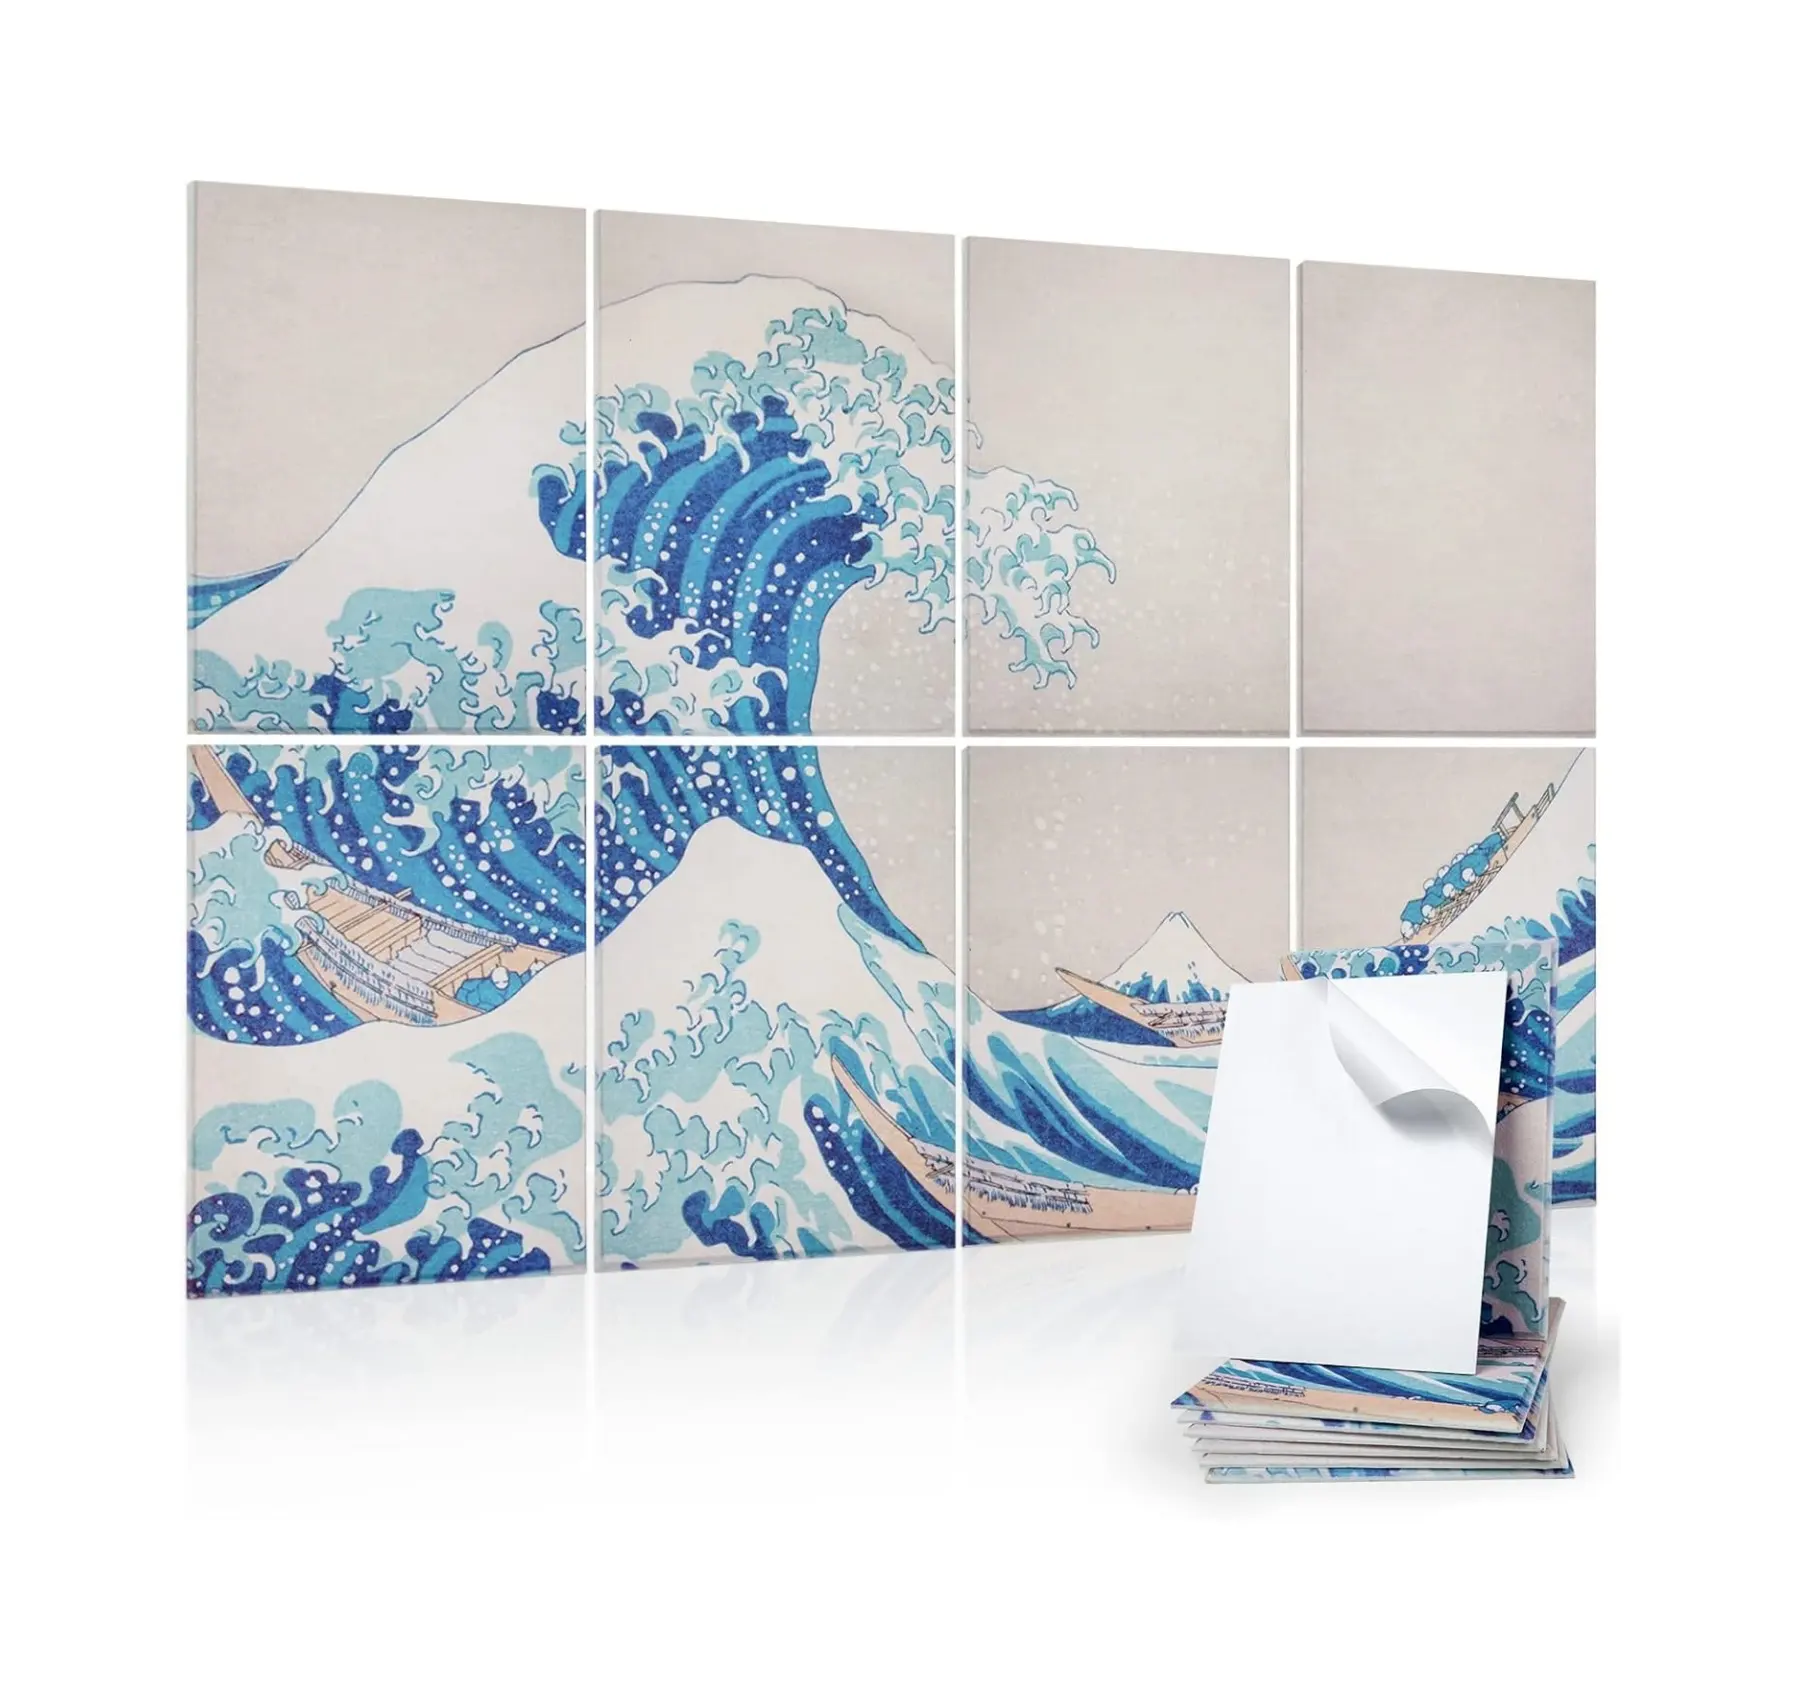 Paneles de pared acústicos de arte decorativo Mejor tratamiento acústico que paneles de pared Insonorizados y absorbentes de sonido Premium de espuma